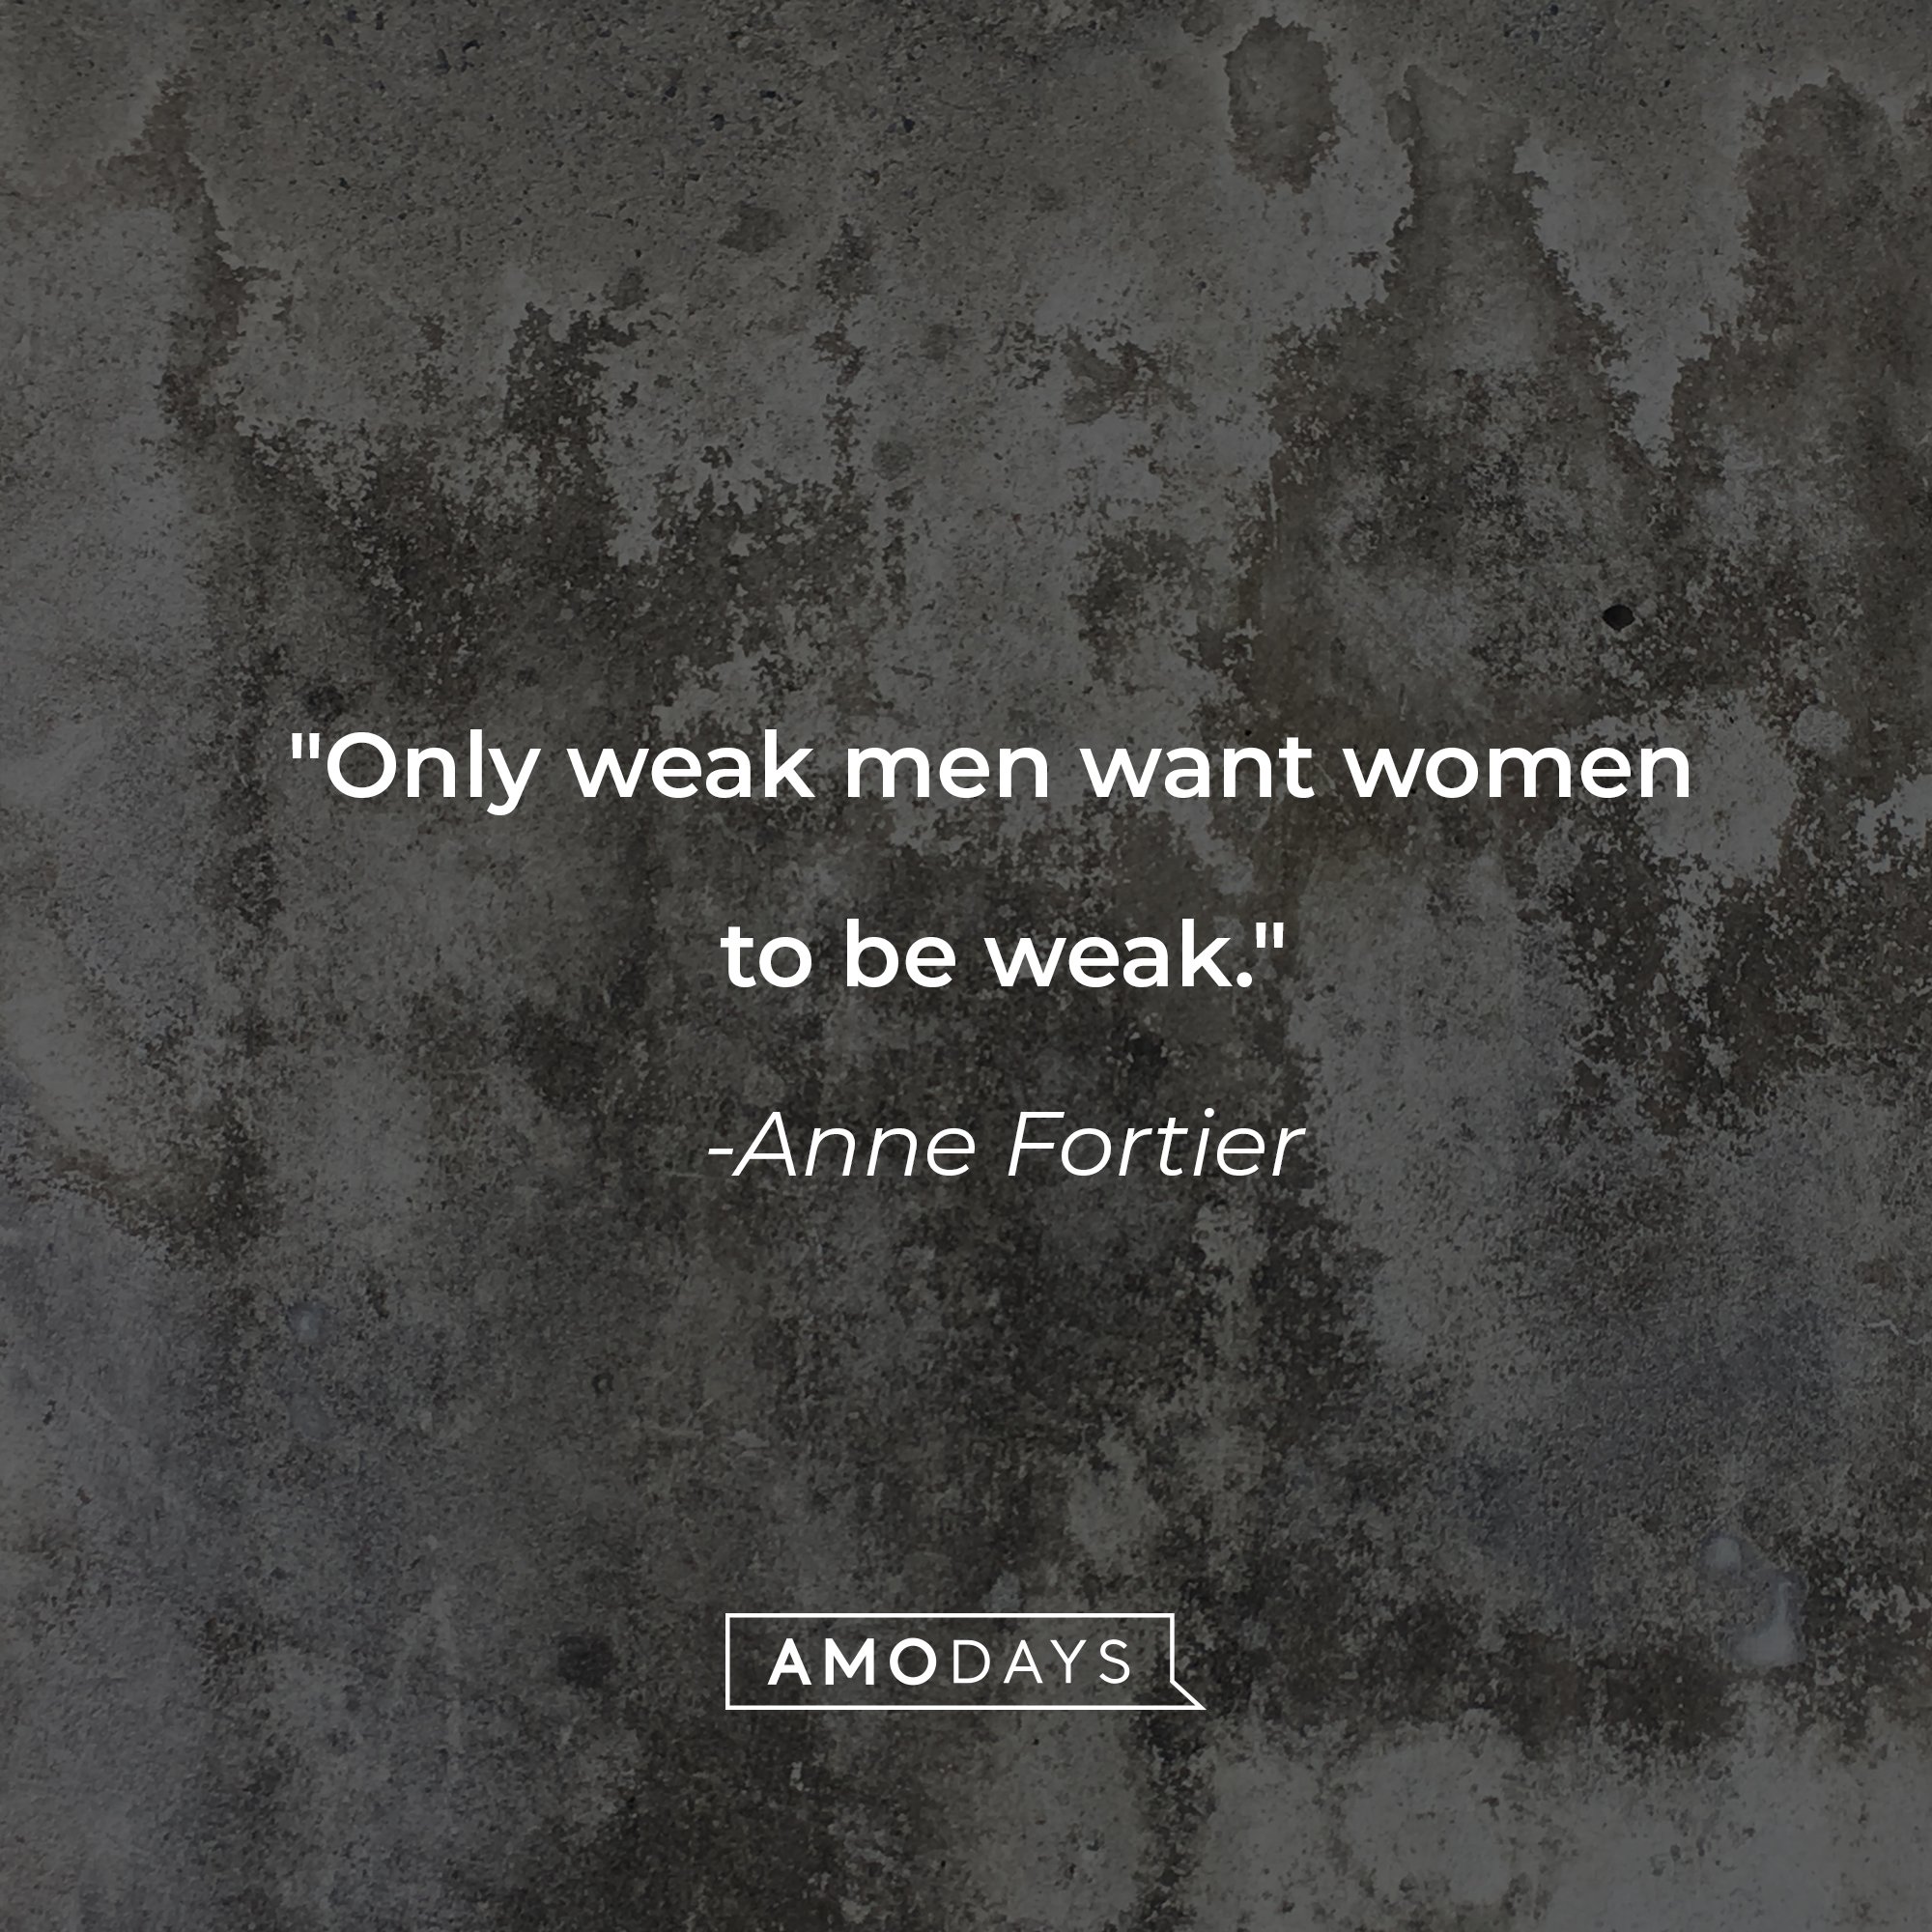 Anne Fortier's quote: "Only weak men want women to be weak." | Image: AmoDays